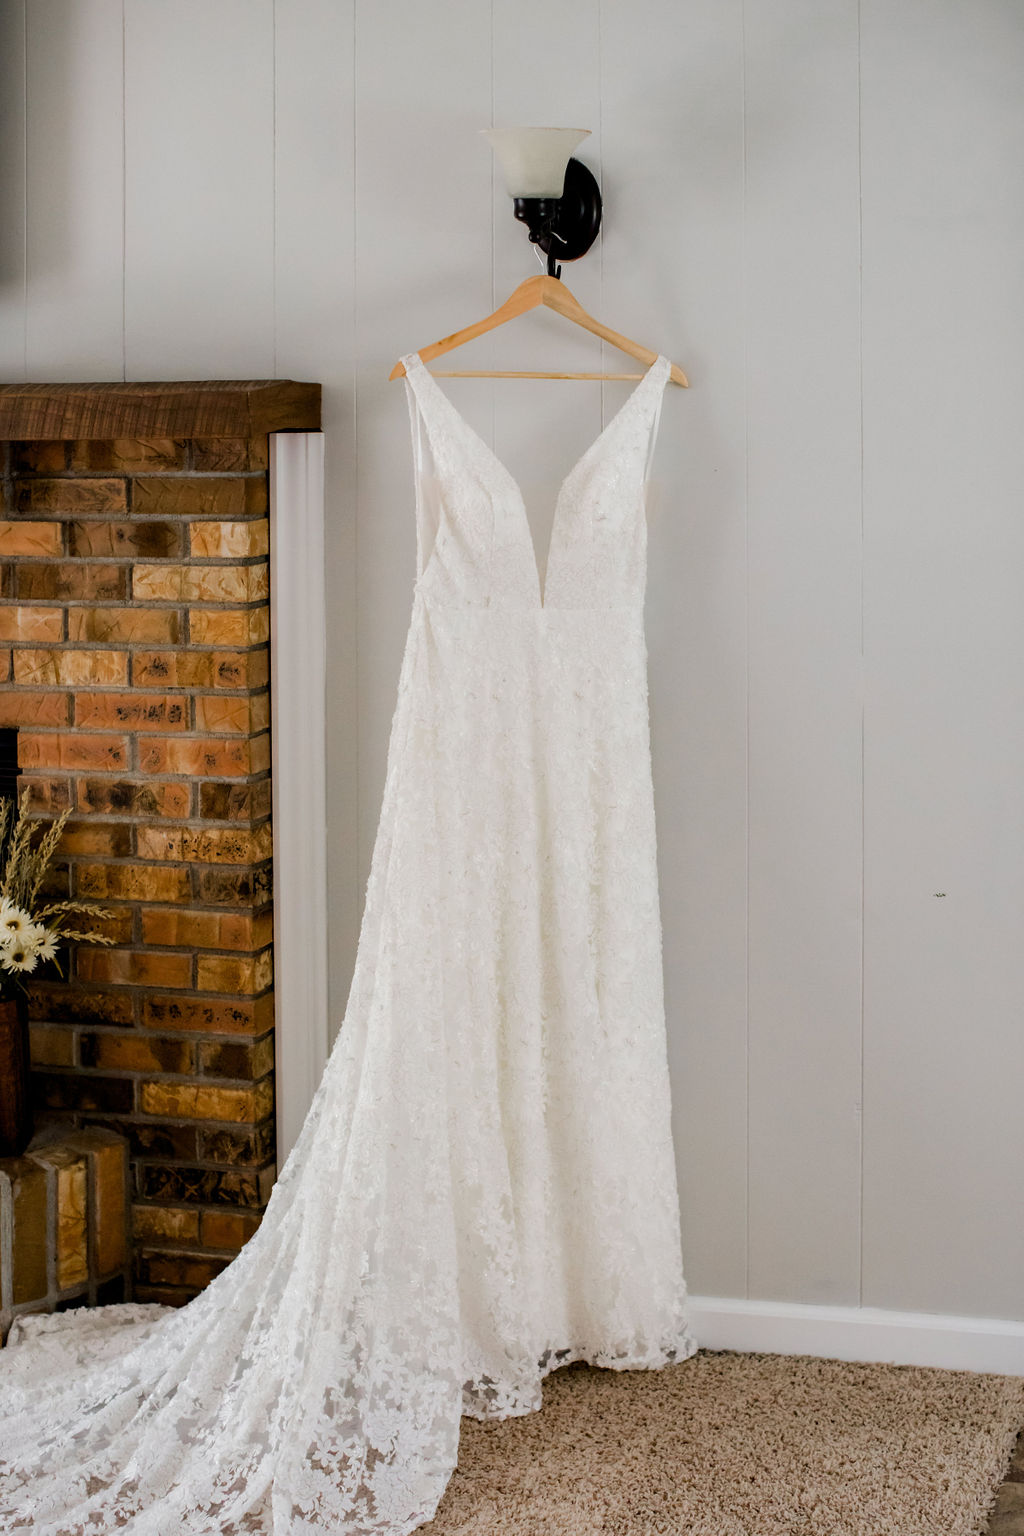 Jackson, MI wedding gown